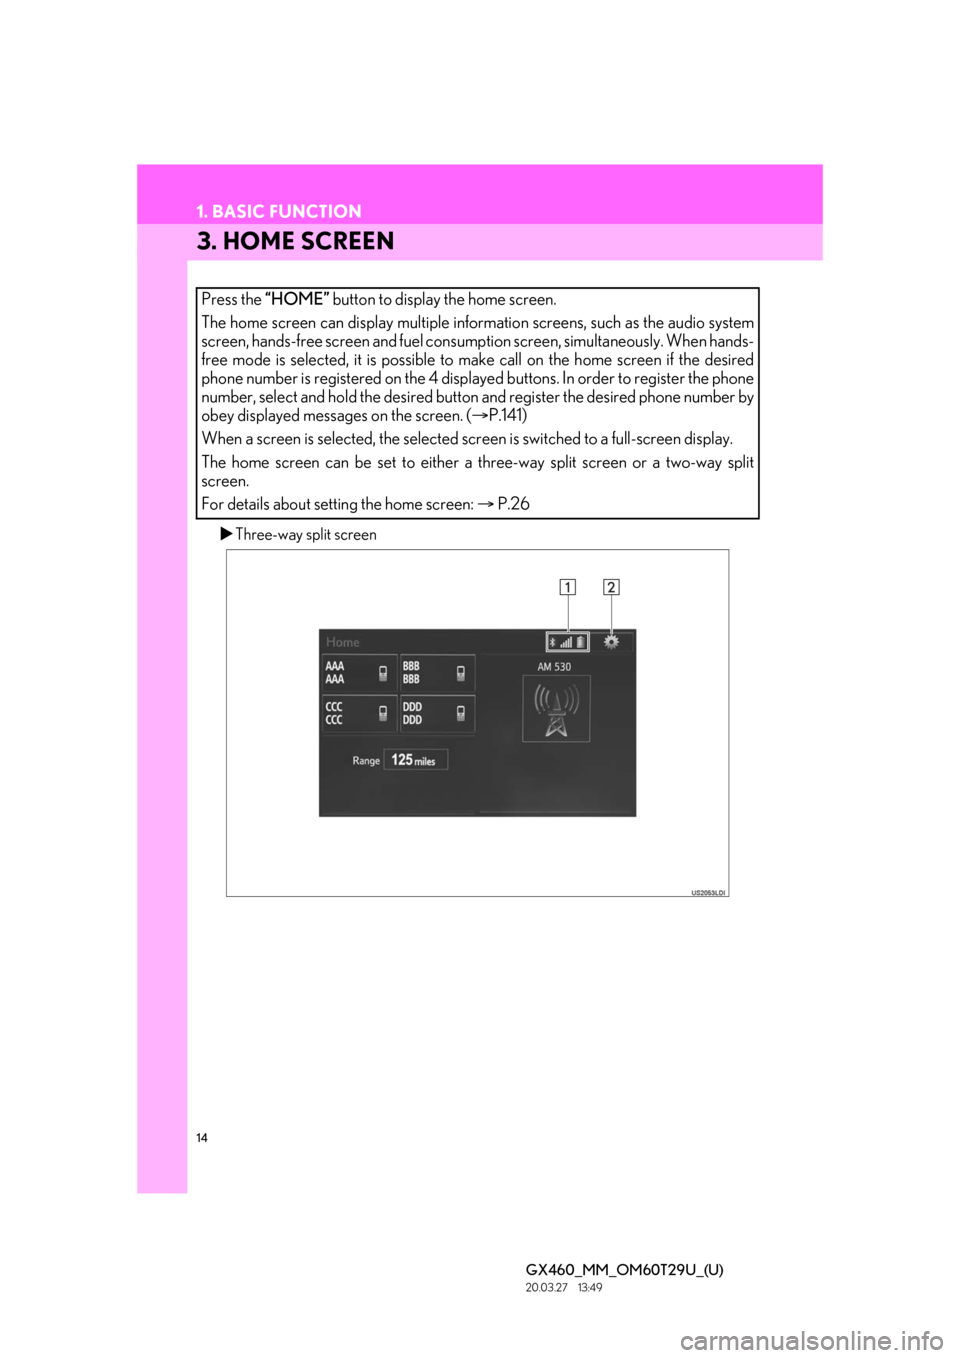 Lexus GX460 2021  Owners Manual / LEXUS 2021 GX460 MULTIMEDIA OWNERS MANUAL (OM60T29U) 14
1. BASIC FUNCTION
GX460_MM_OM60T29U_(U)20.03.27     13:49
3. HOME SCREEN
Three-way split screen
Press the “HOME”  button to display the home screen.
The home screen can display multiple info